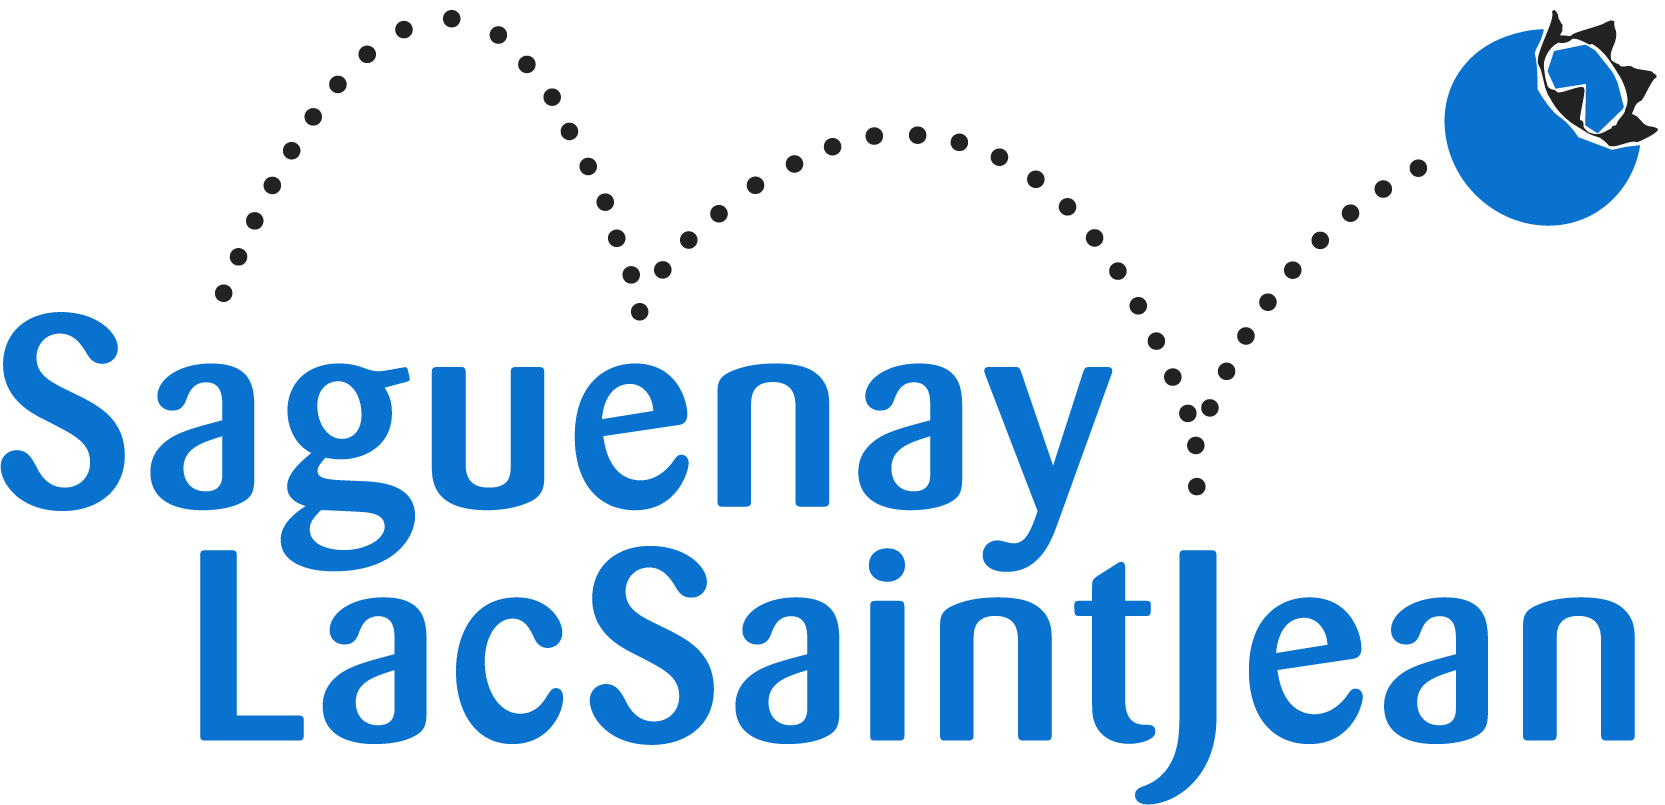 saguenay-lac-saint-jean